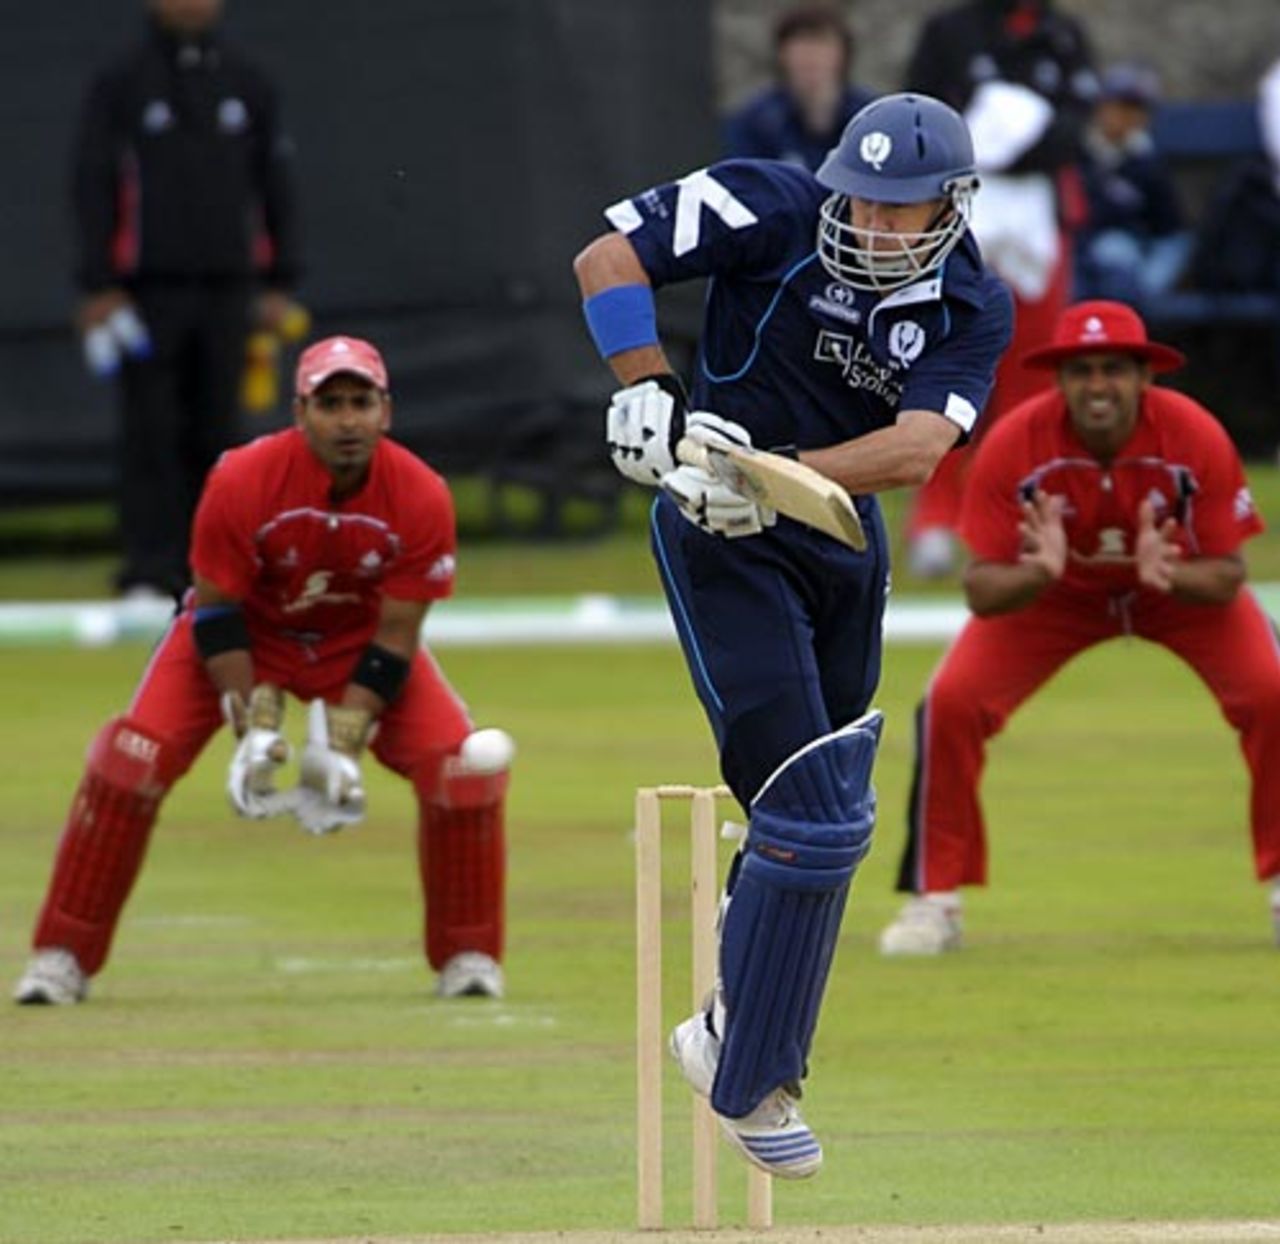 Gavin Hamilton plays off his hips, Scotland v Canada, 1st ODI, Aberdeen, July 7, 2009